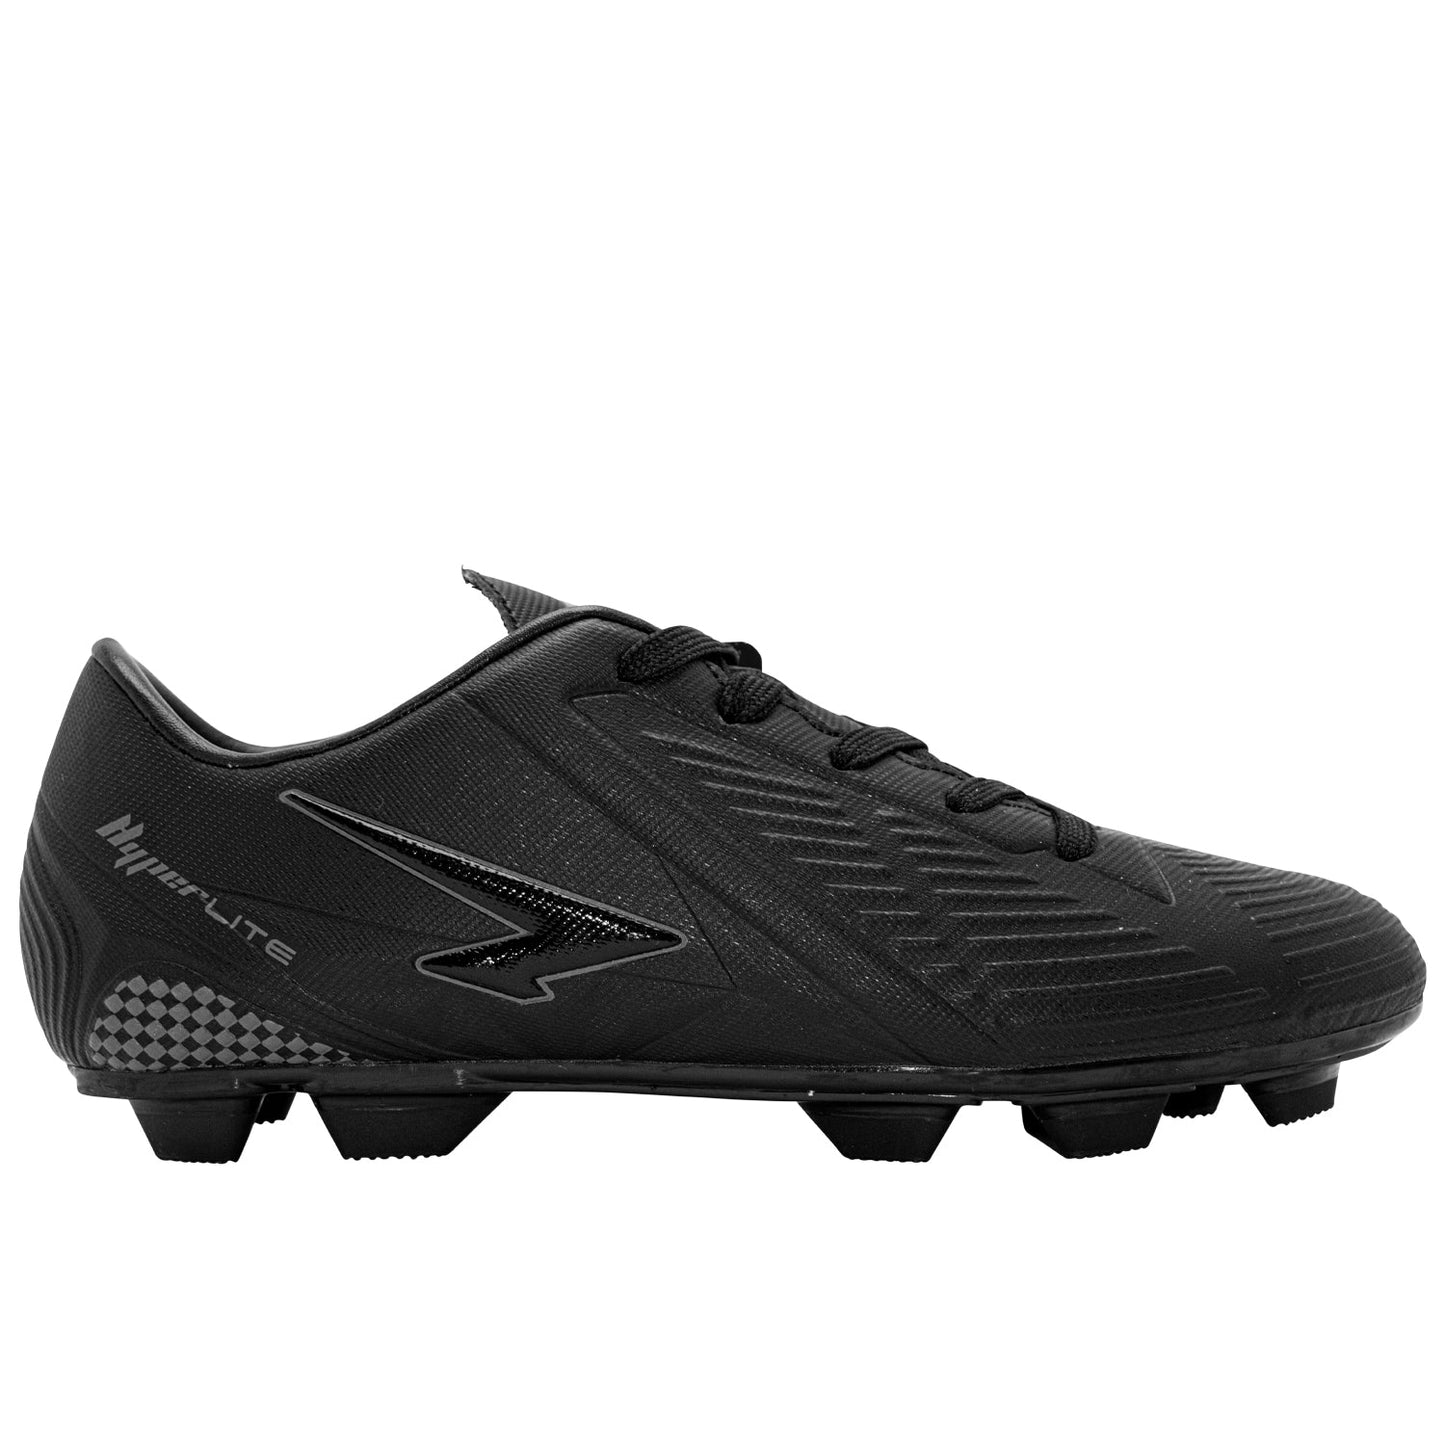 Vector Senior Football Boots - Black/Black